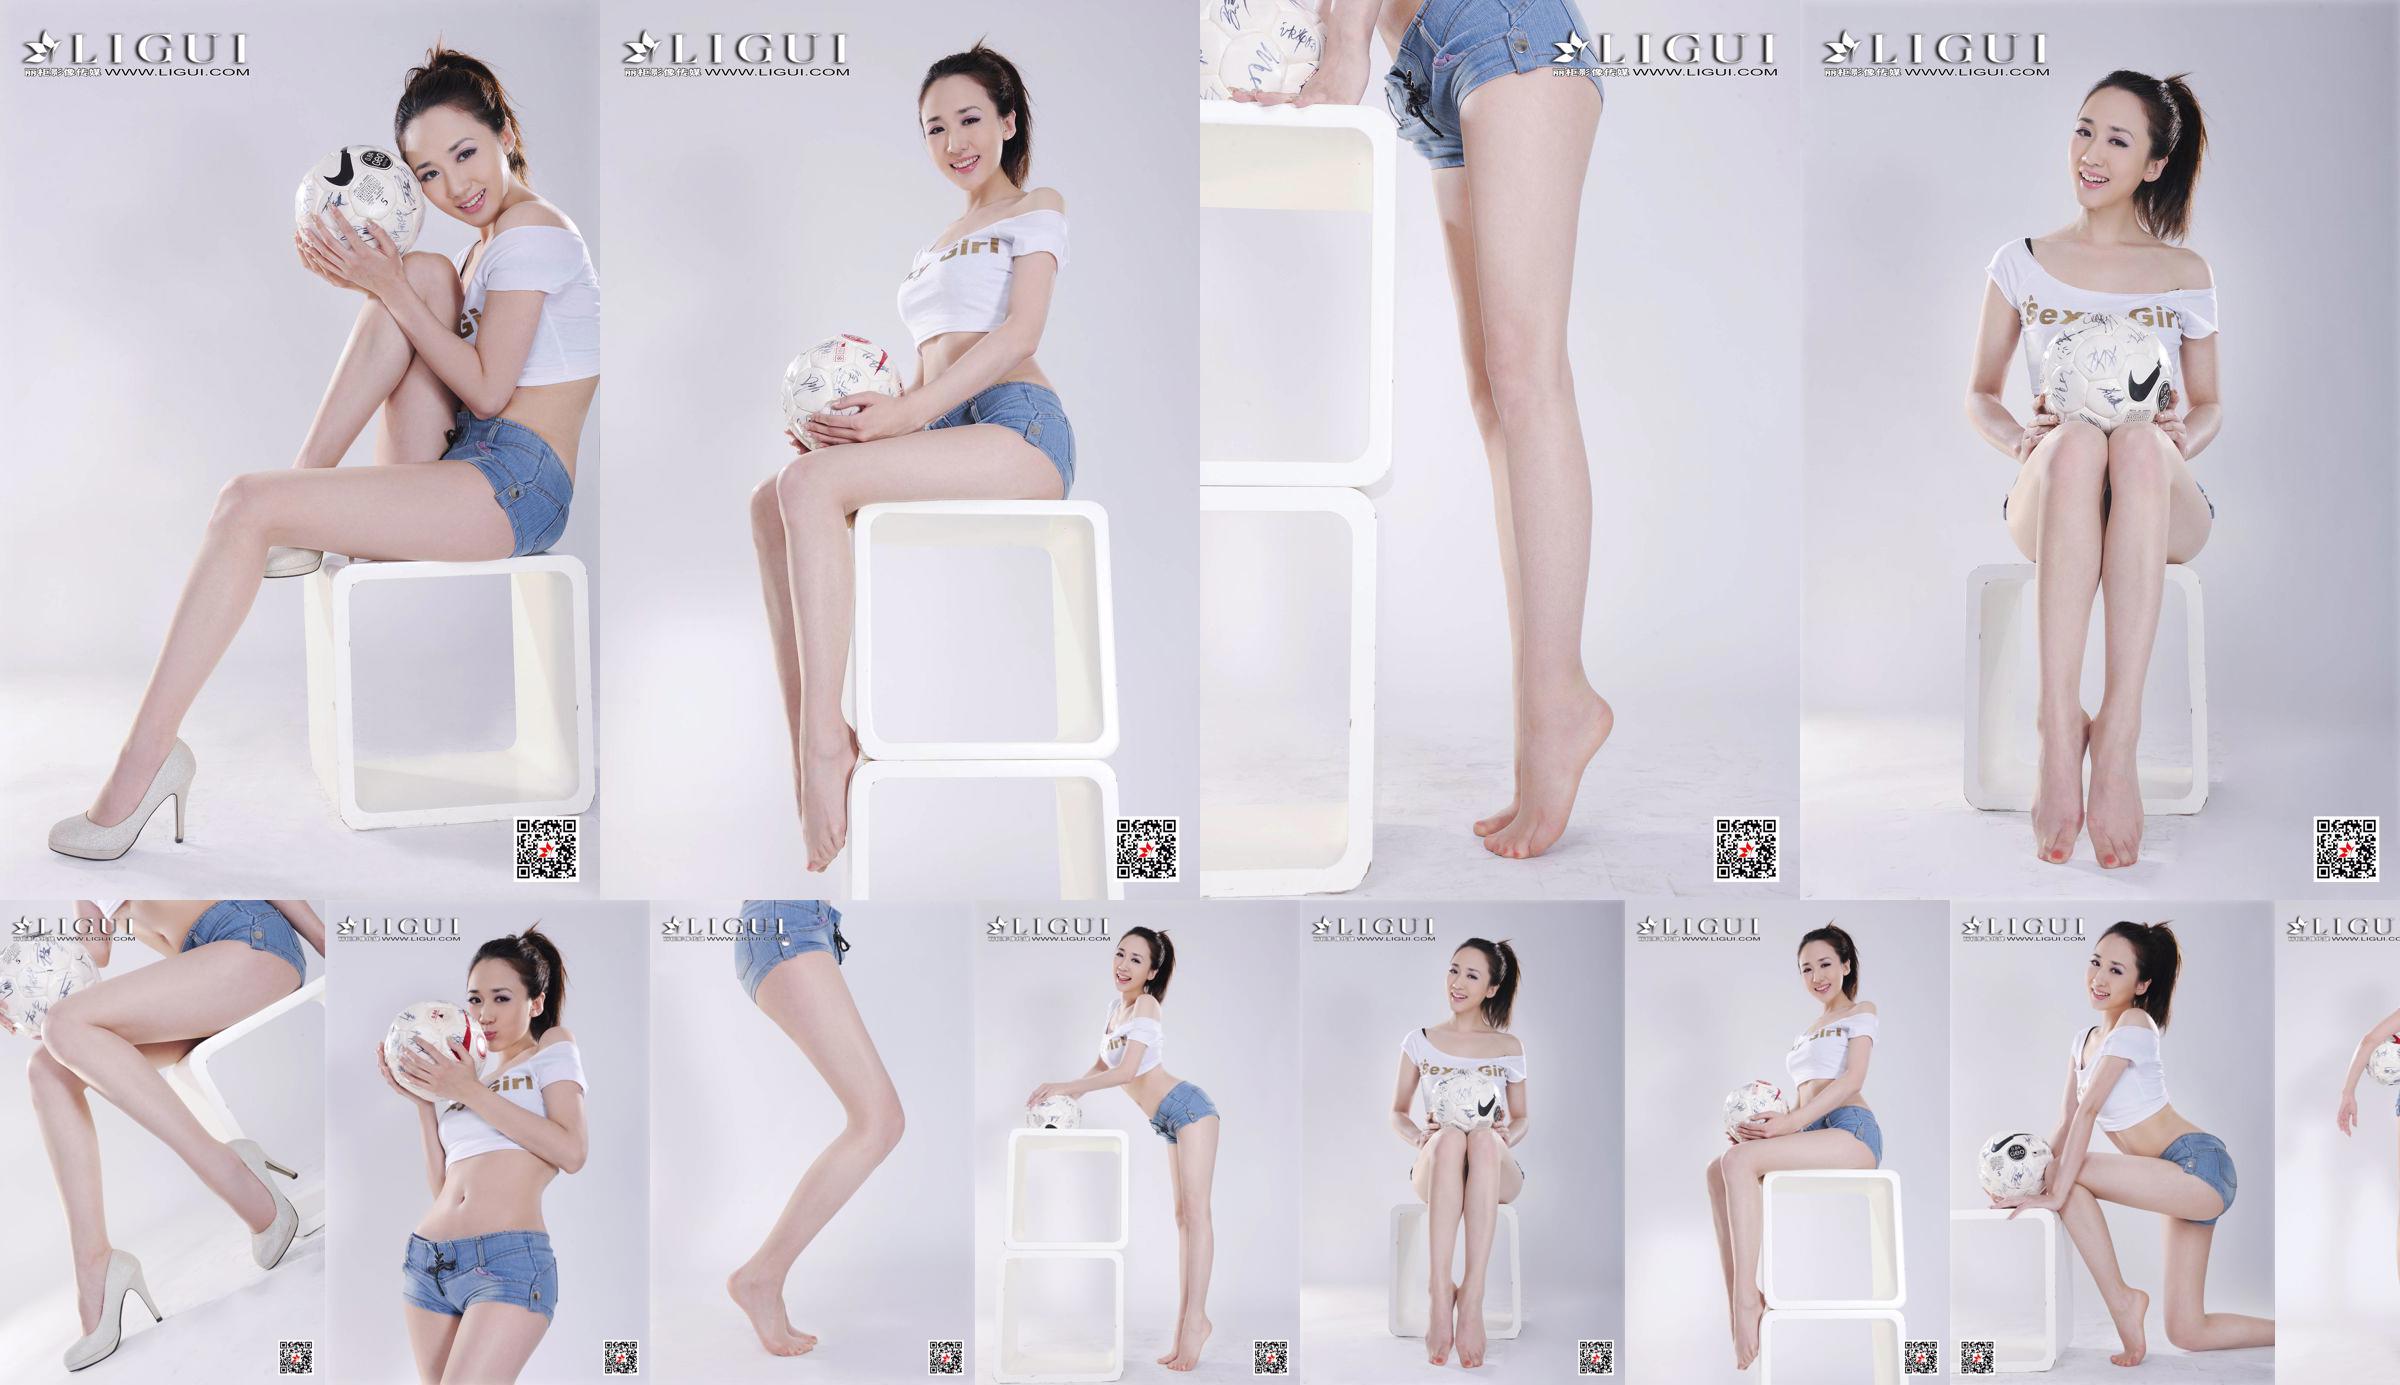 Model Qiu Chen "Gadis Sepak Bola Celana Super Pendek" [LIGUI] No.6851c0 Halaman 2